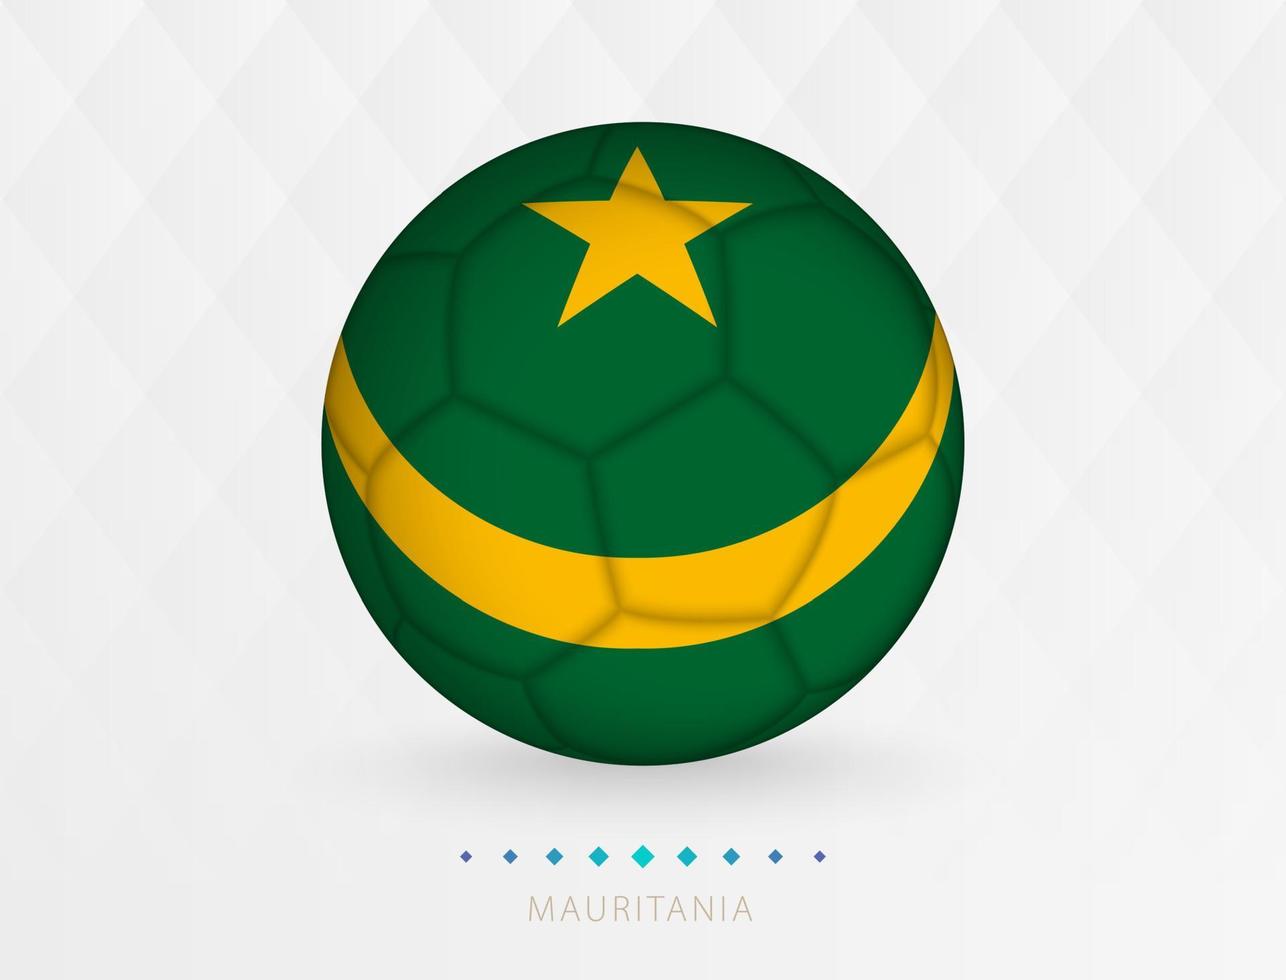 Football ball with Mauritania flag pattern, soccer ball with flag of Mauritania national team. vector